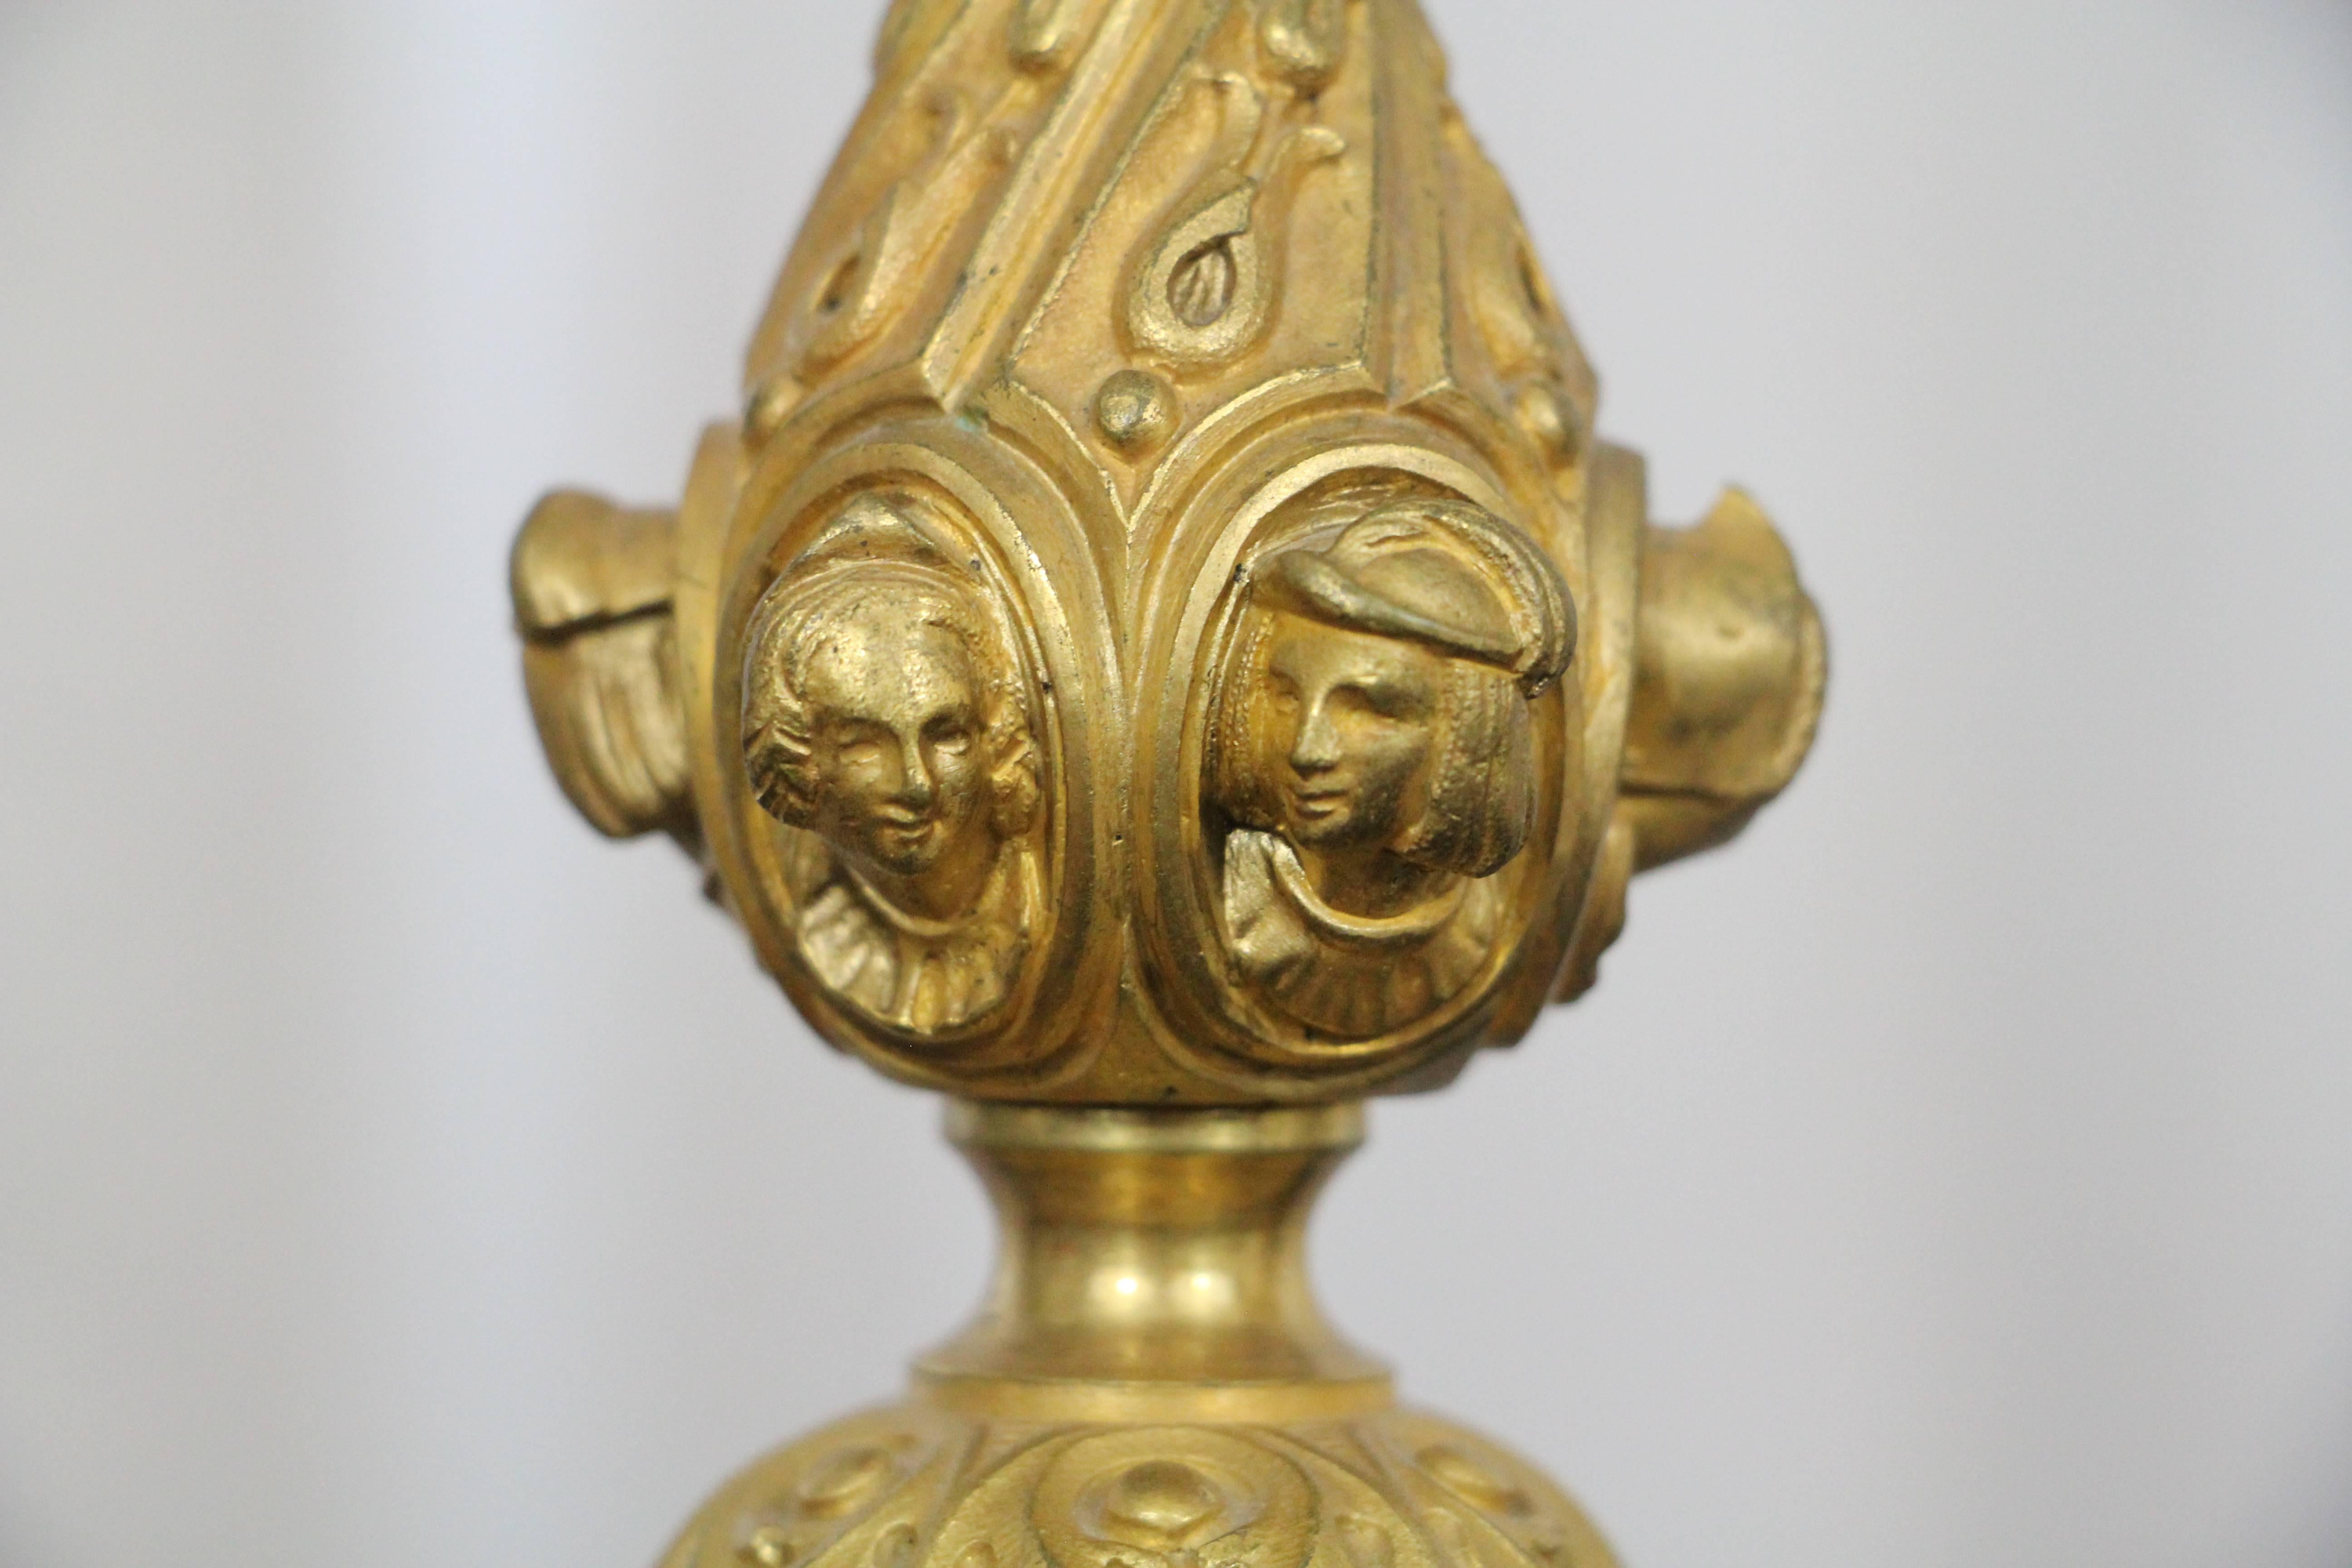 A pair of exquisite bronze doré (ormolu) candelabra. Excellent work with beautiful details.